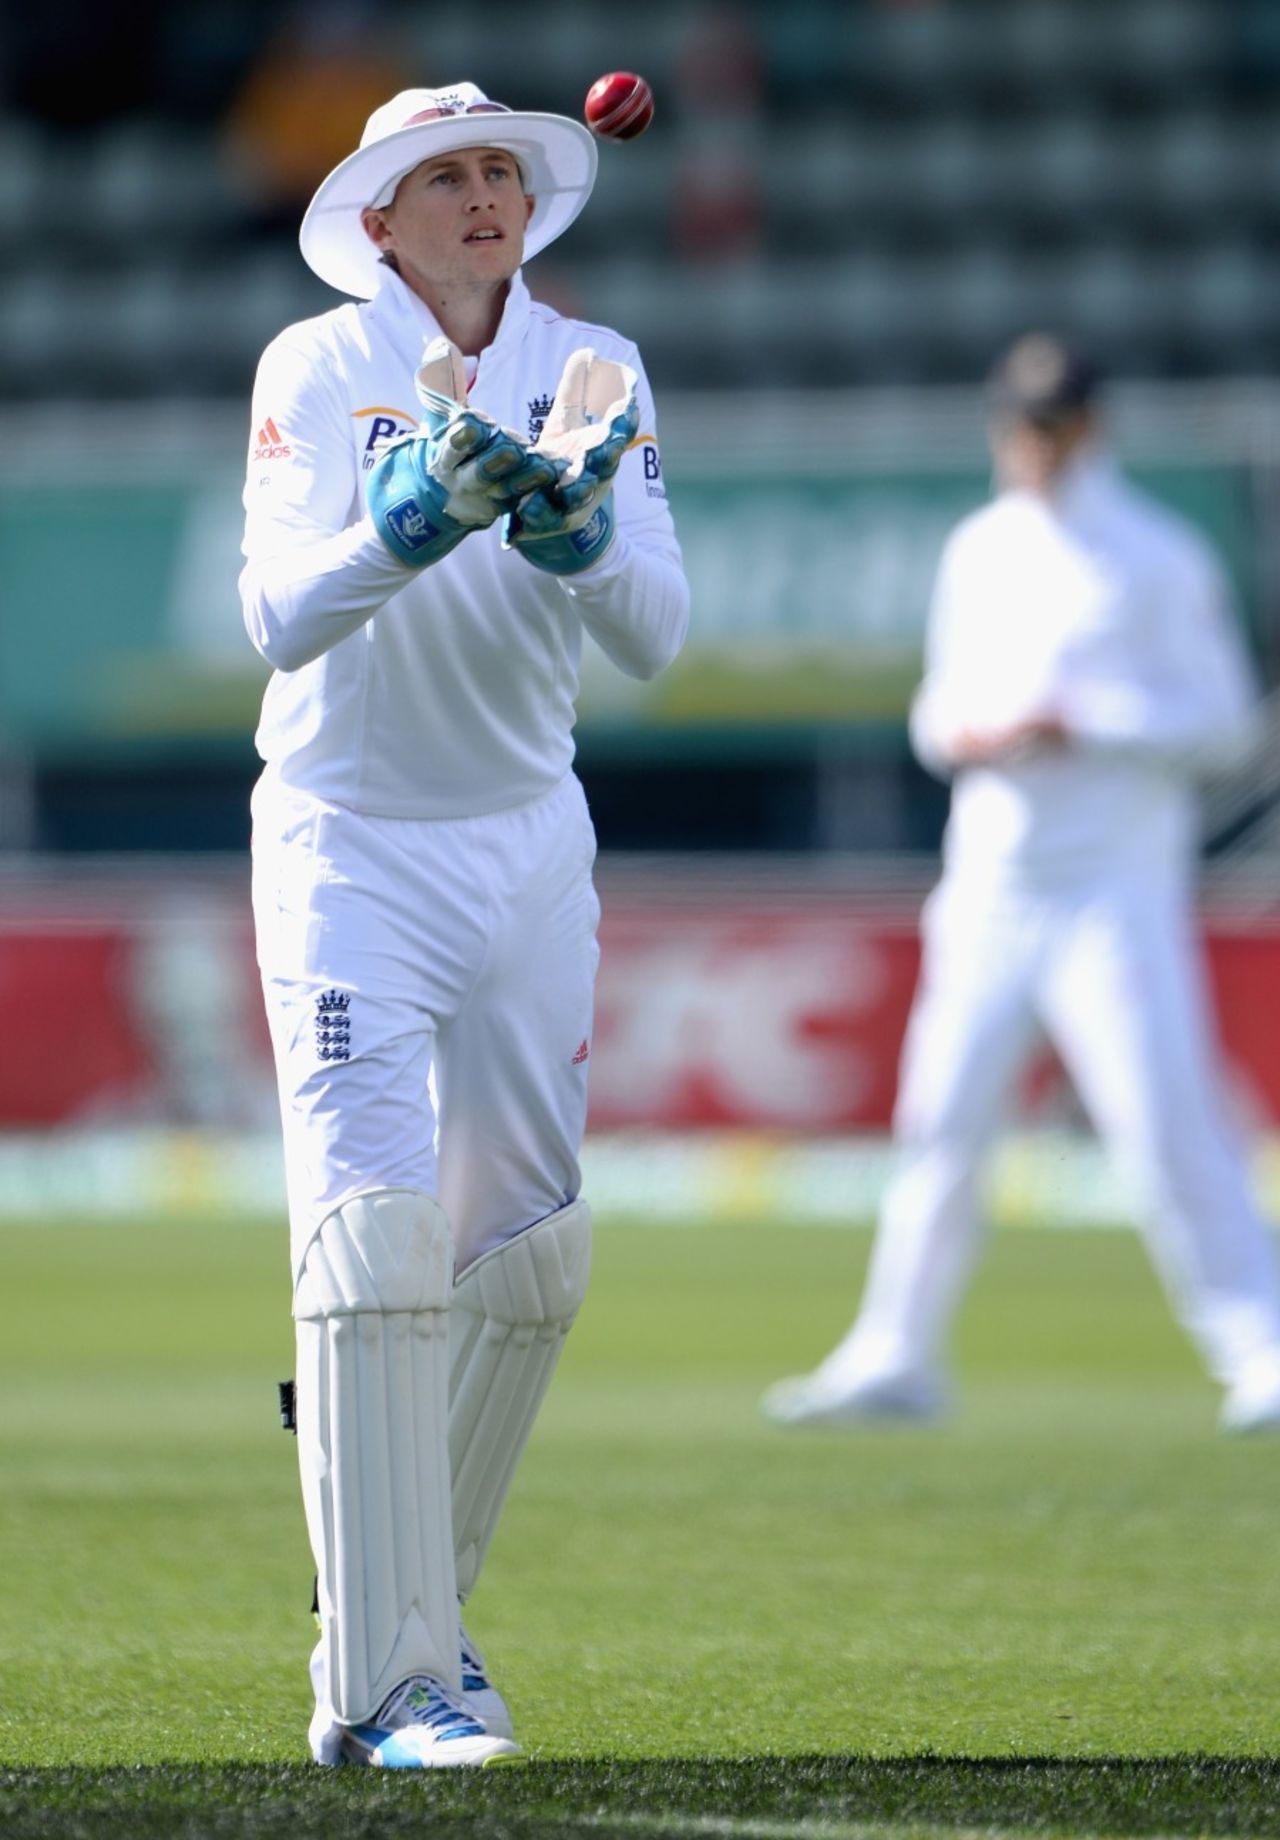 Joe Root kept wicket with Matt Prior off the field injured, Australia A v England, Hobart, 4th day, November 9, 2013